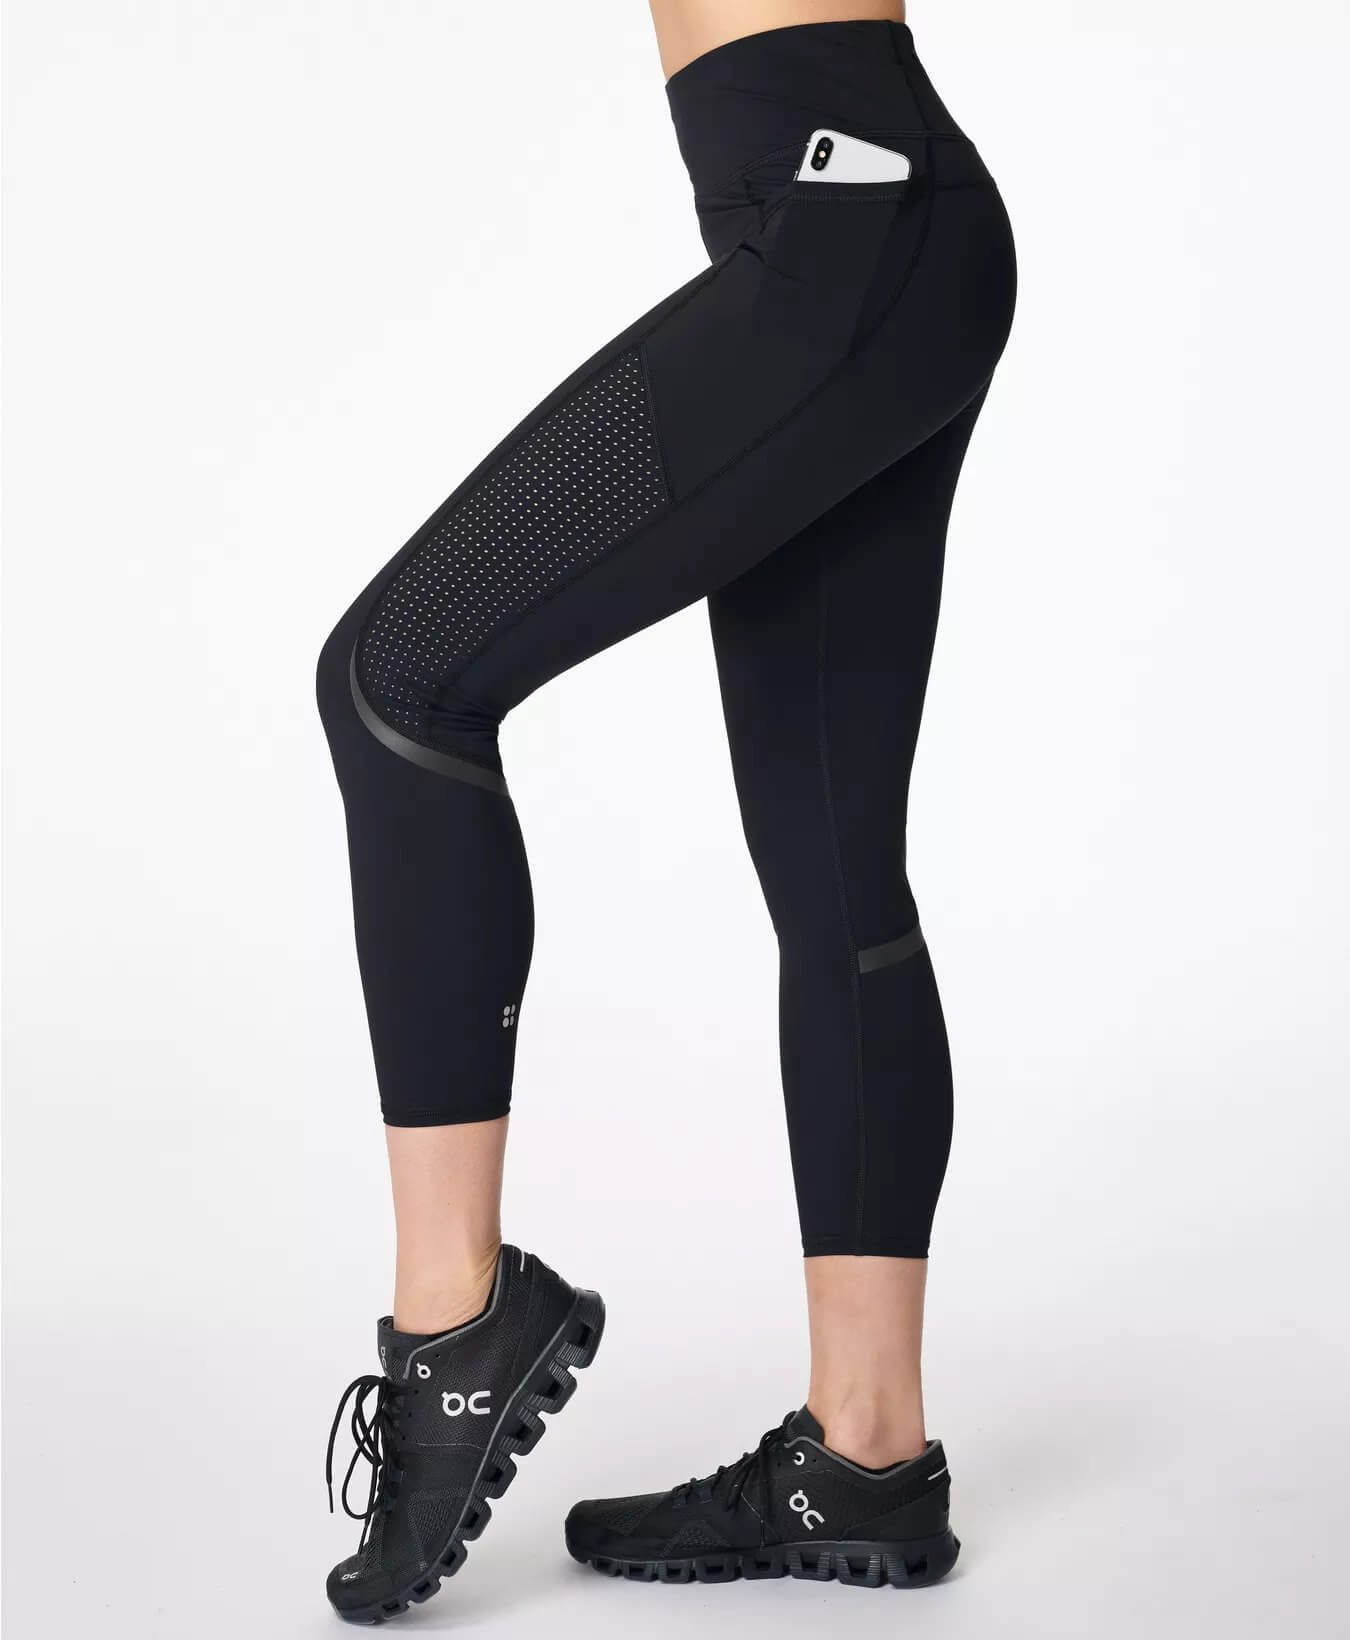 Women's high-waist running leggings - blue